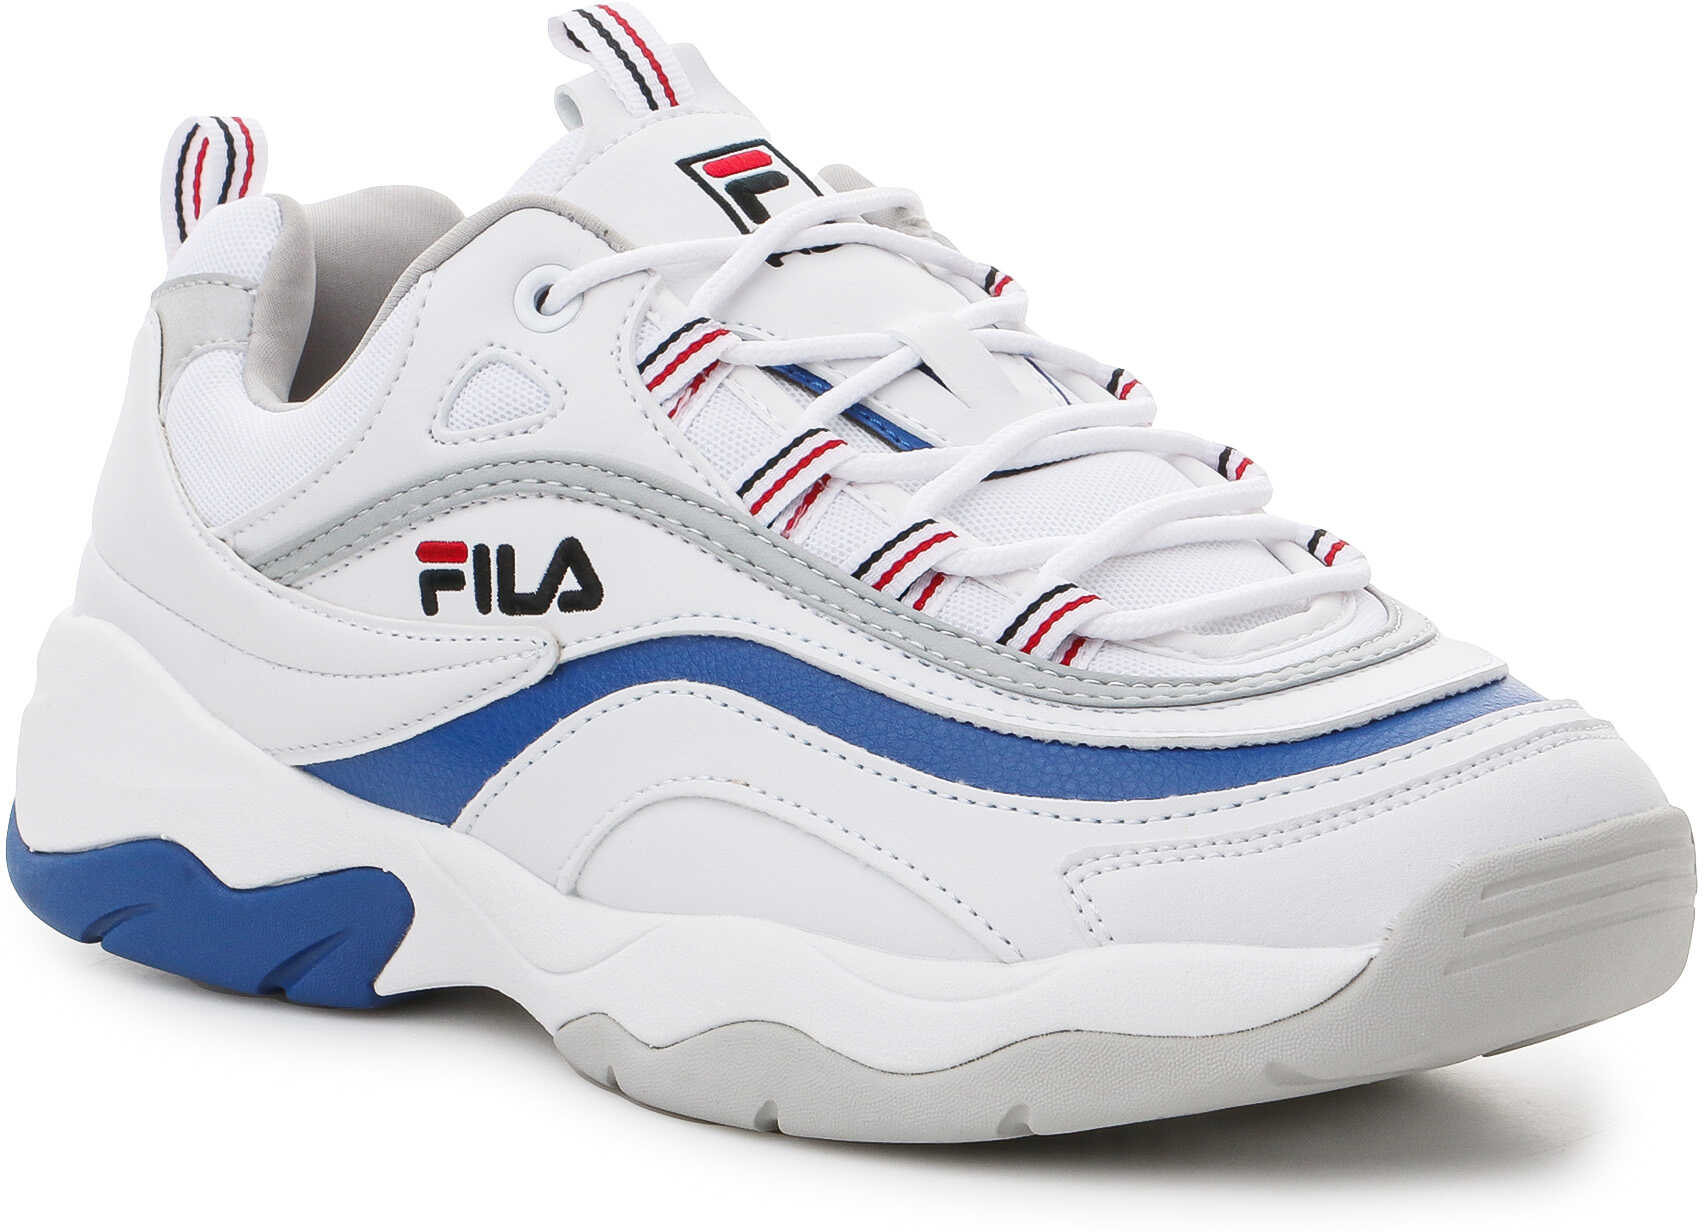 Fila Ray Flow Sneakers White